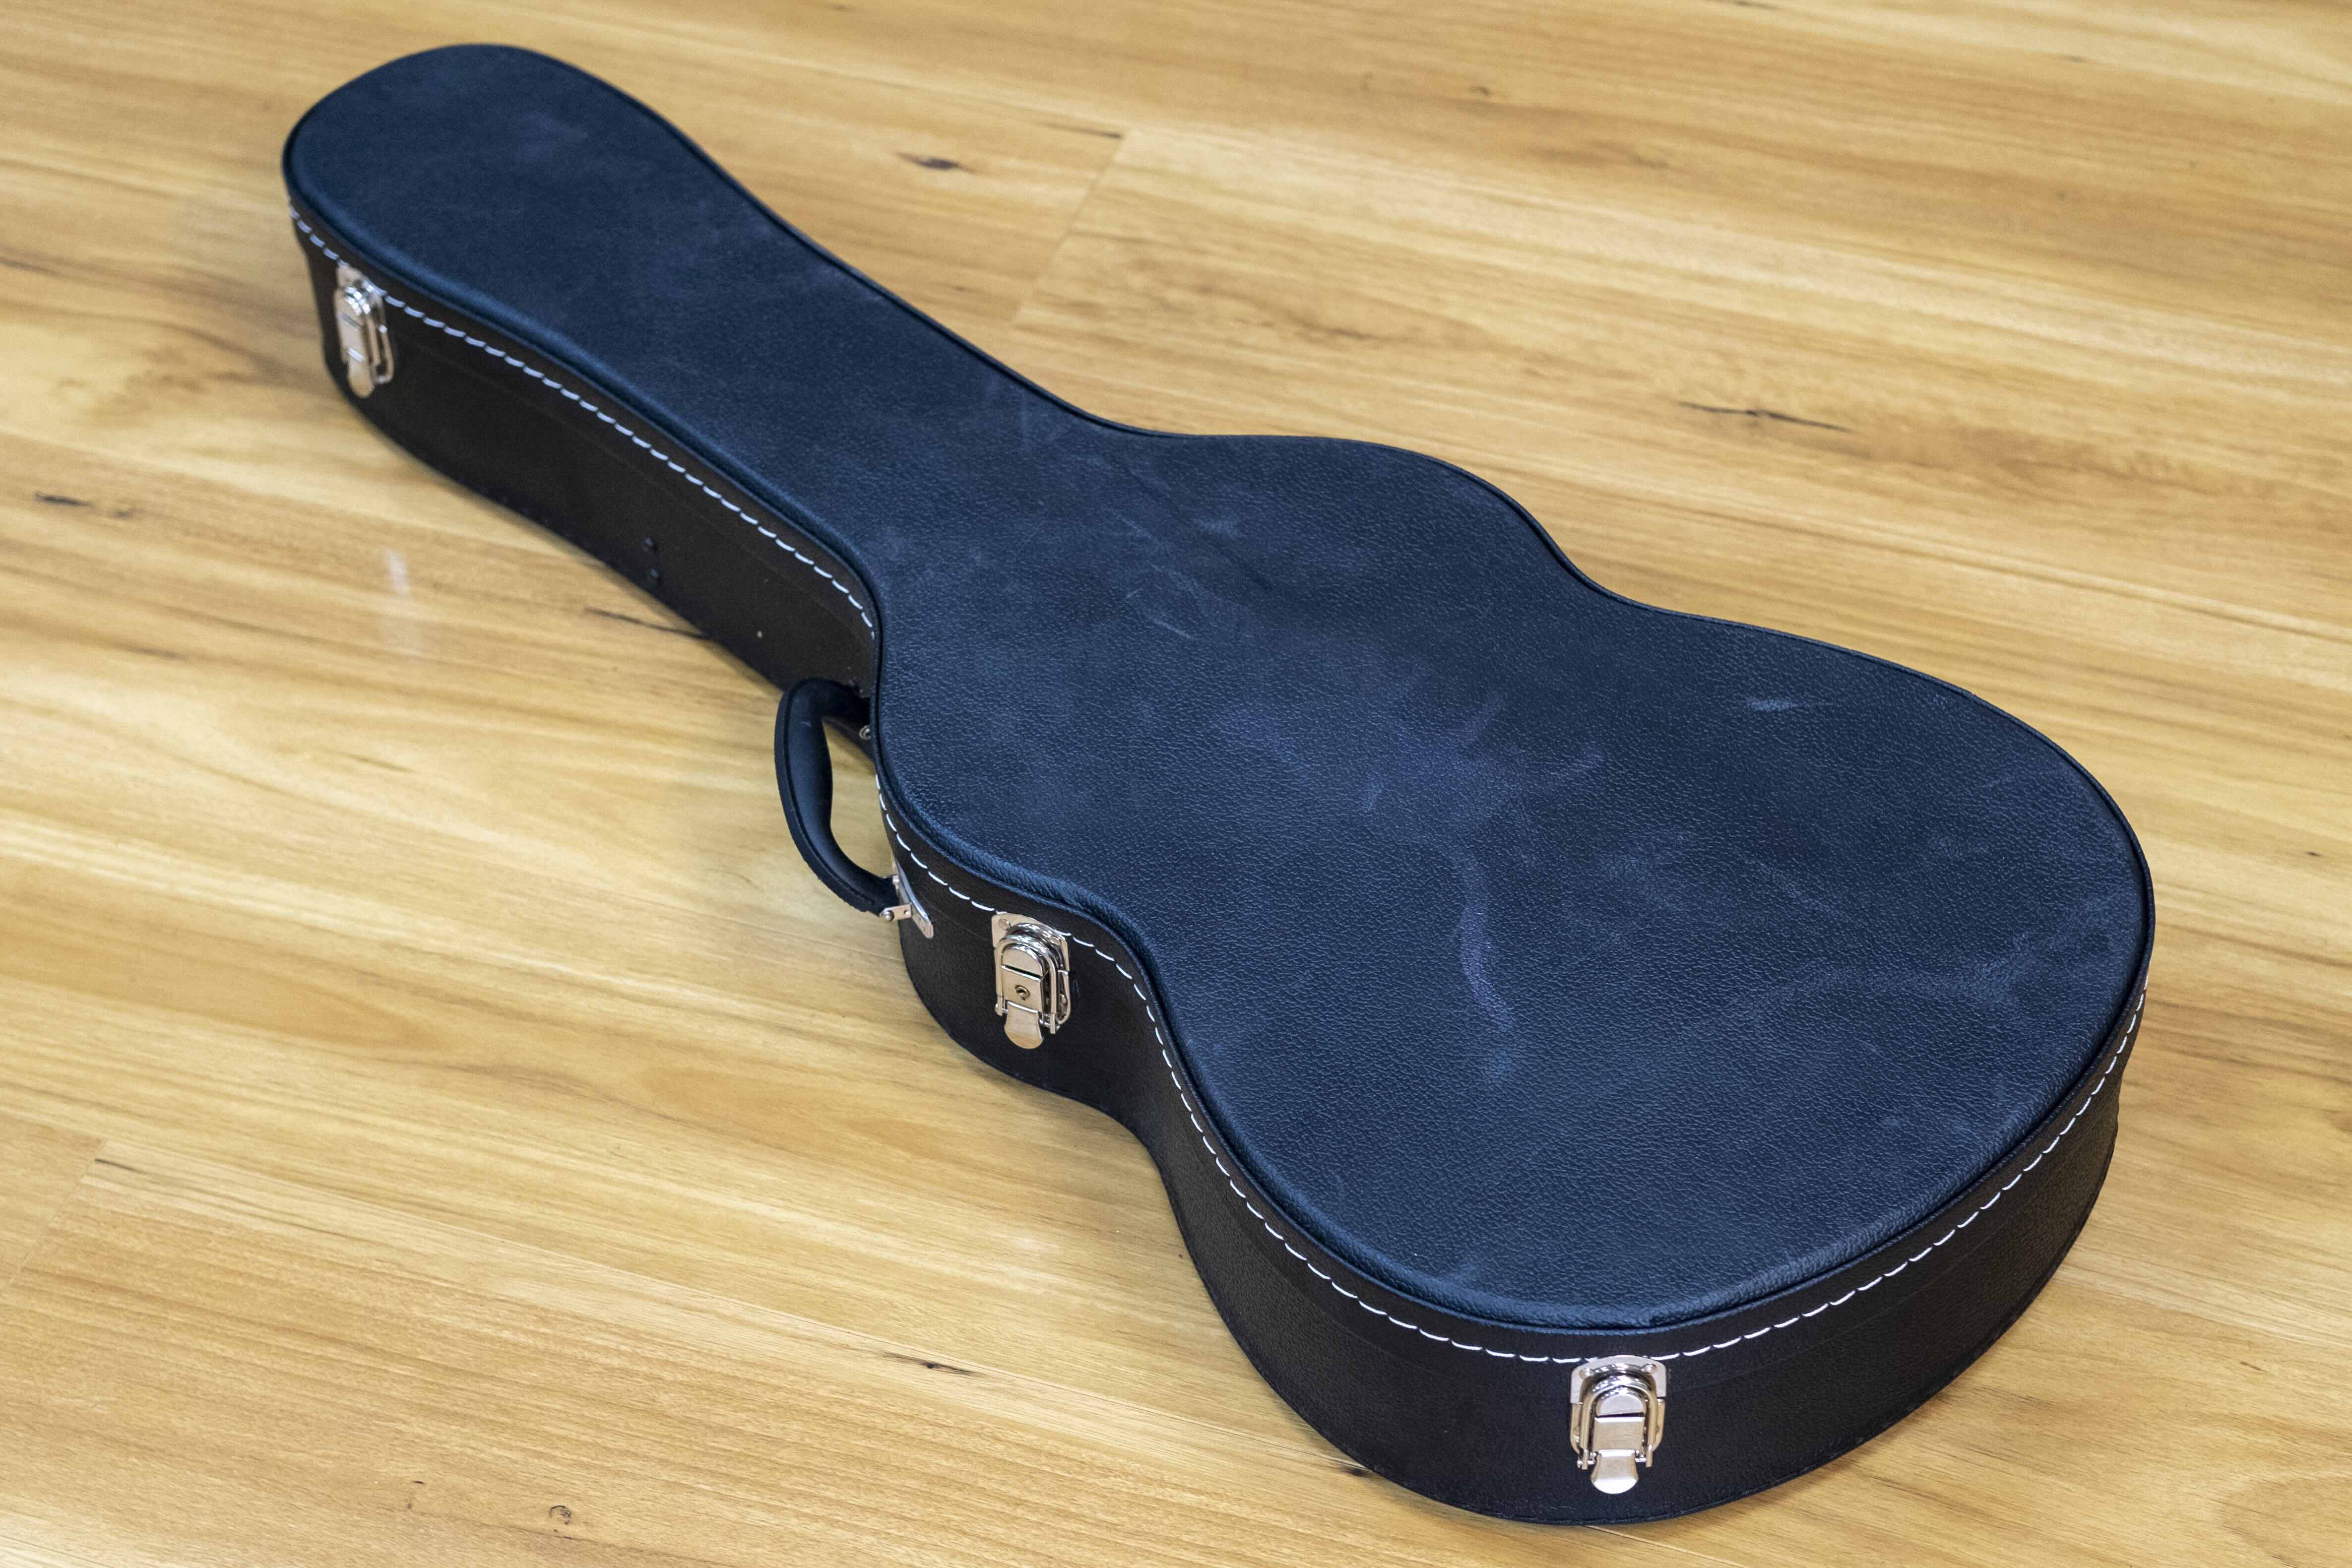 Blueridge BR-40T Tenor Guitar with Hardcase